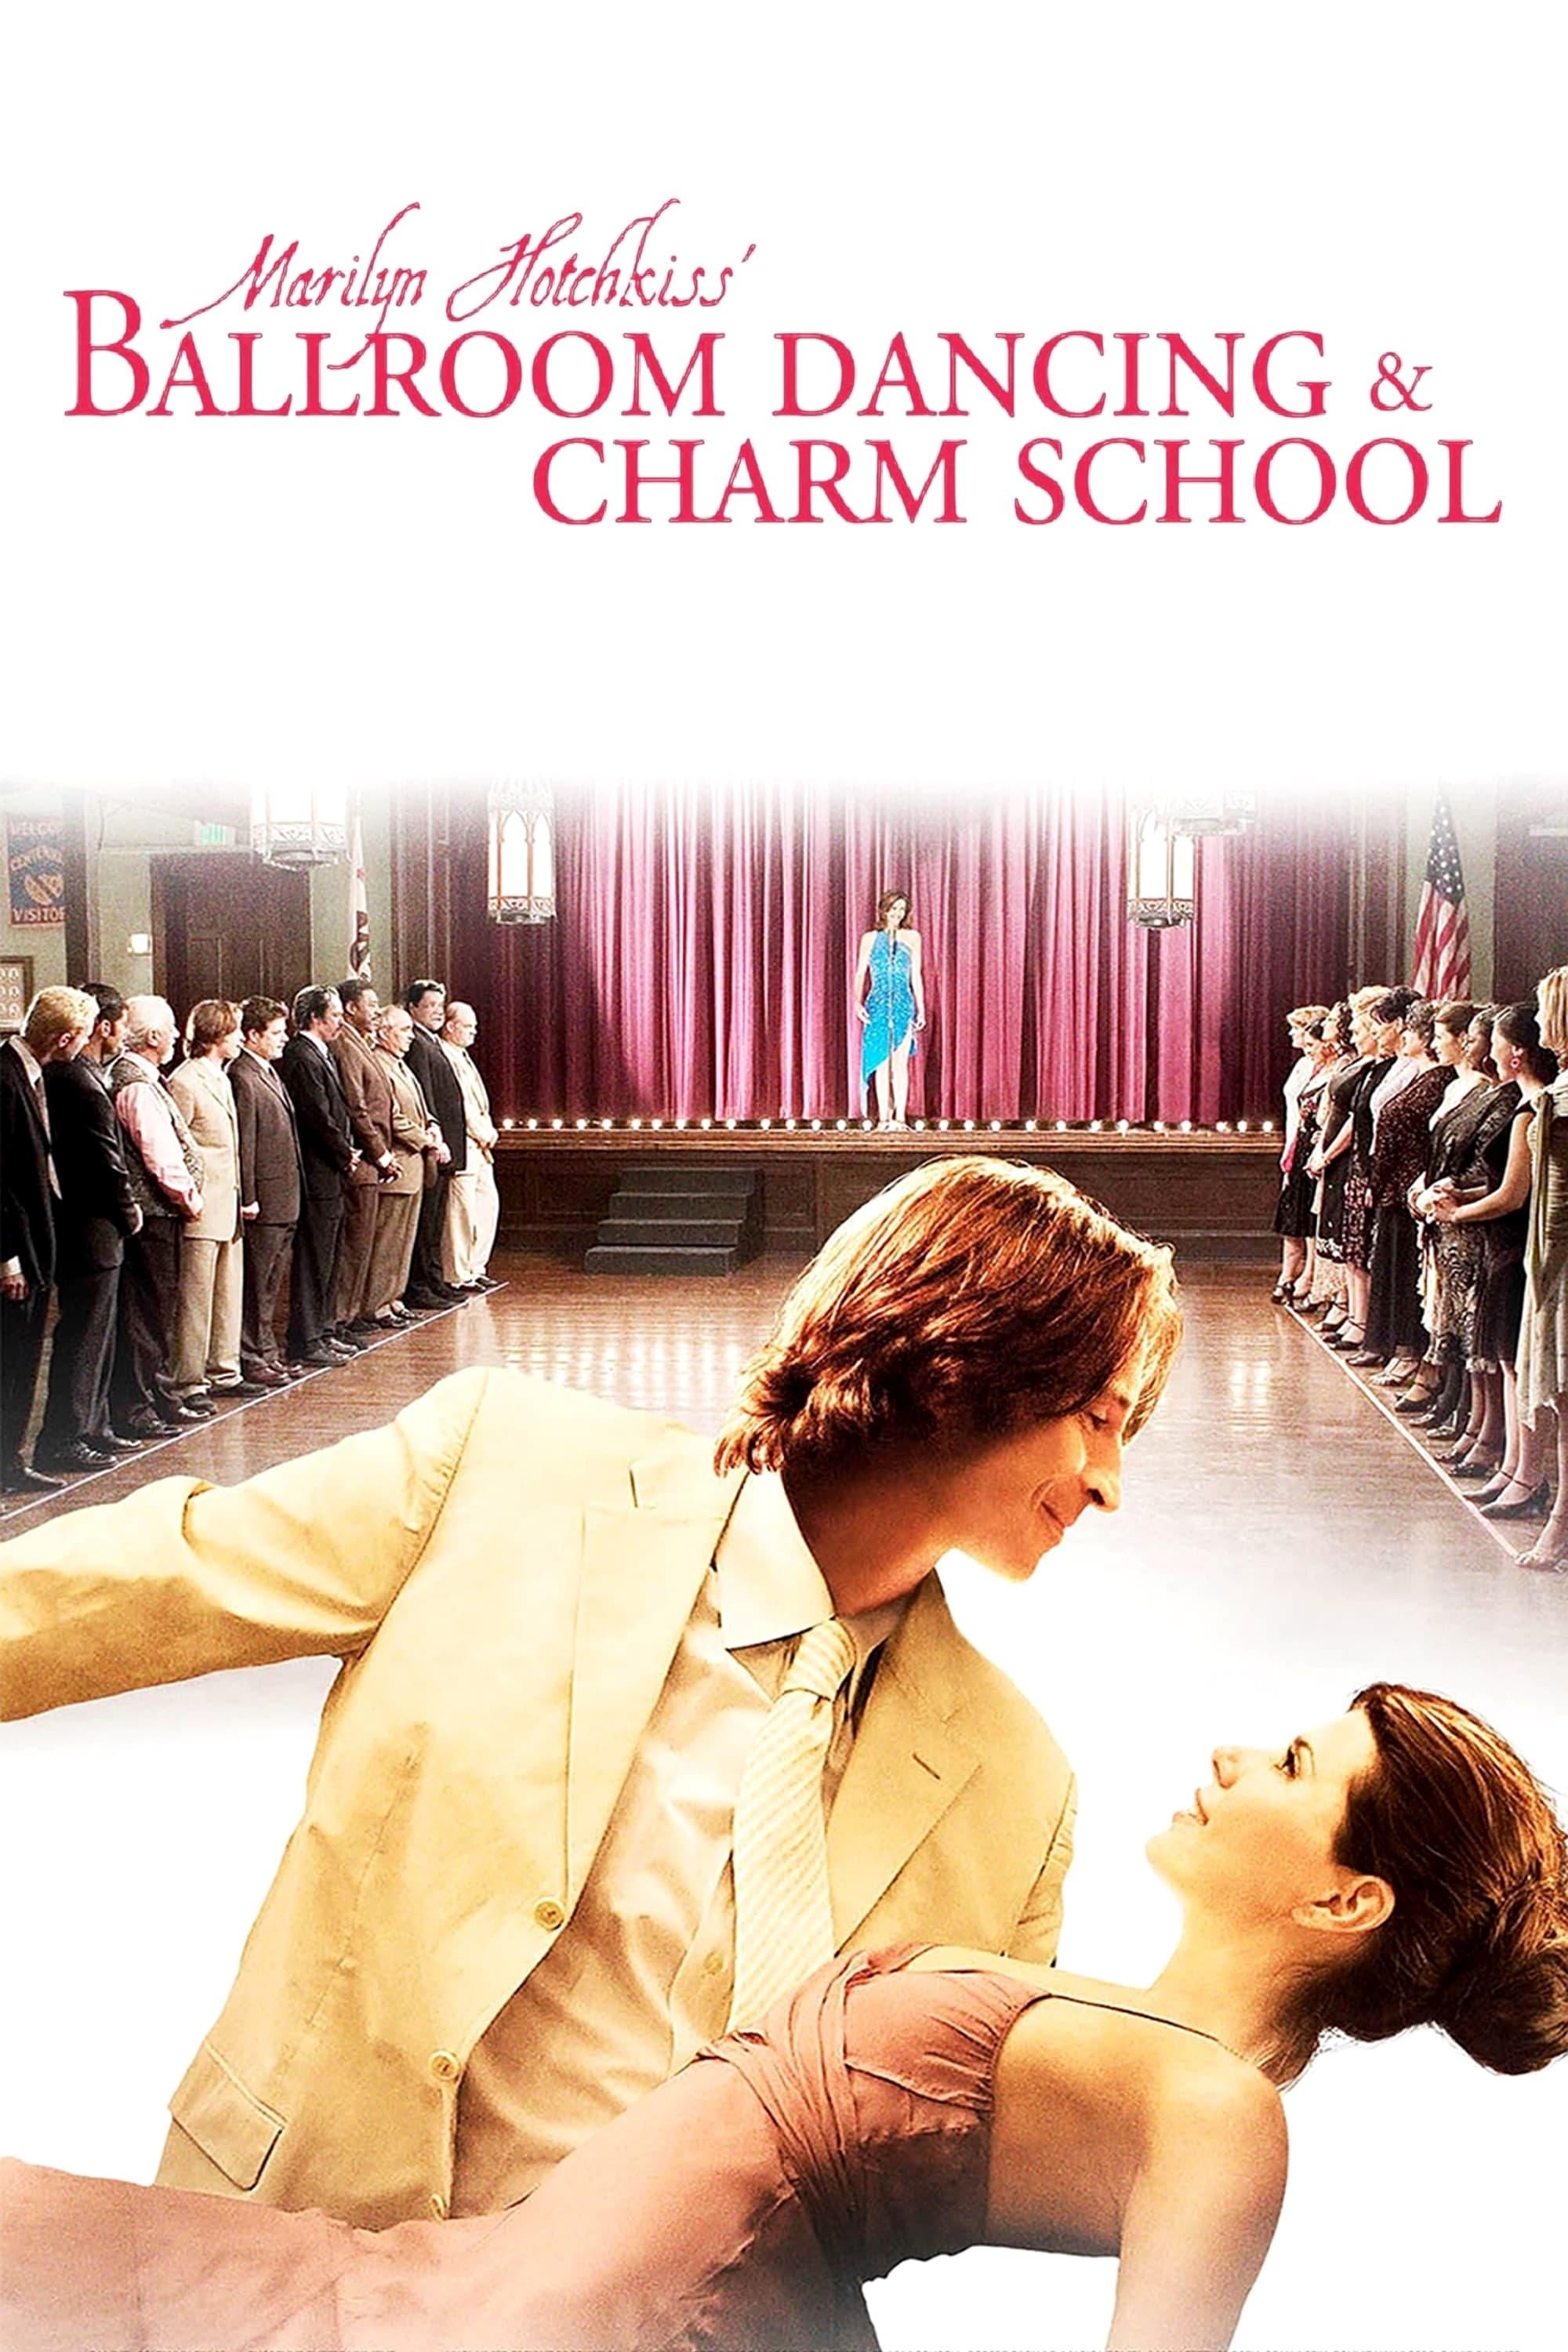 Marilyn Hotchkiss' Ballroom Dancing & Charm School poster